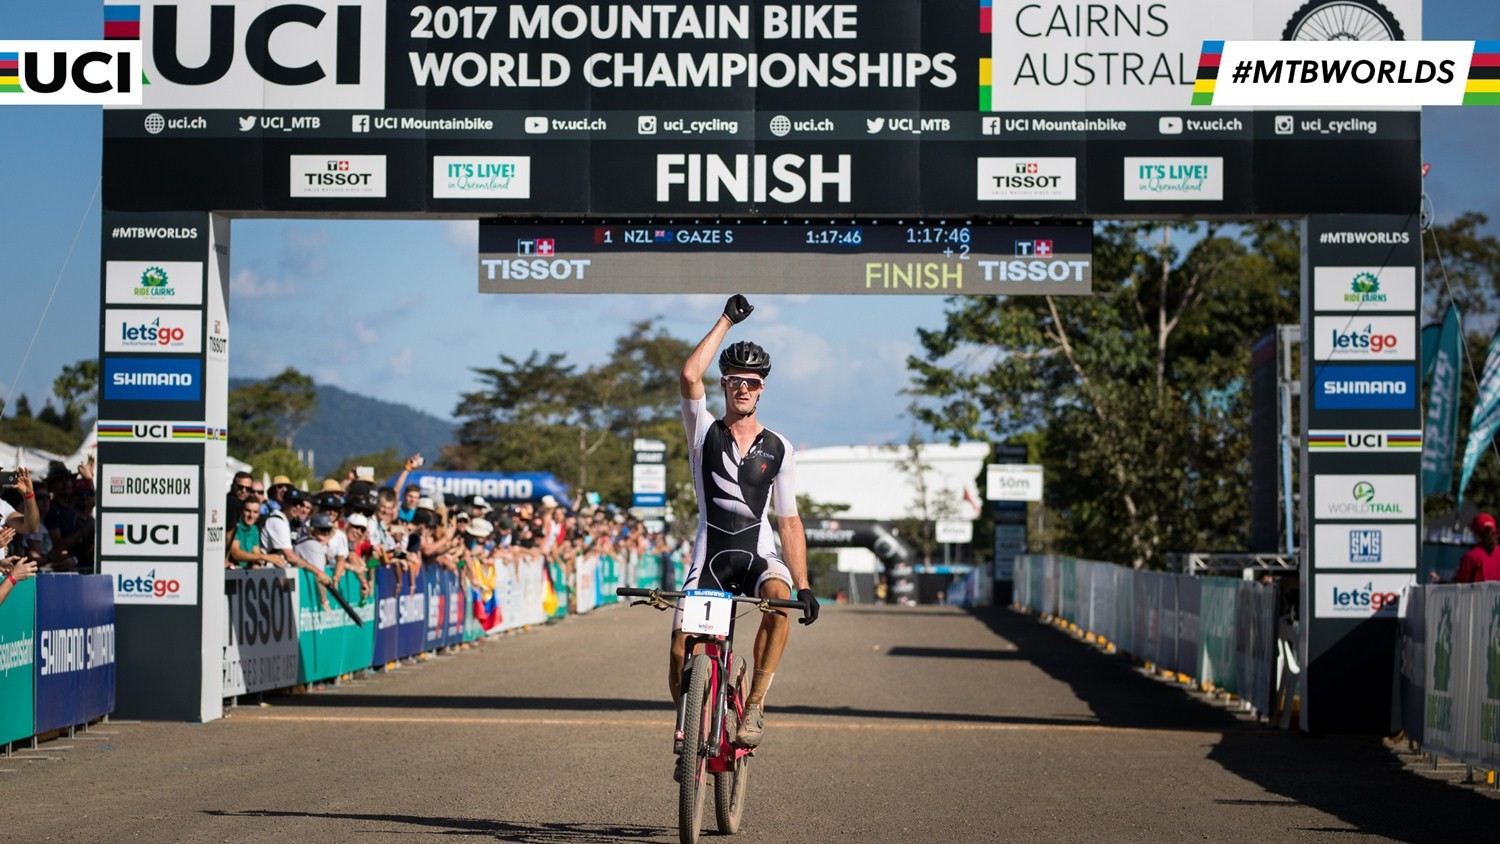 Gaze defends under-23 title at UCI Mountain Bike World Championships